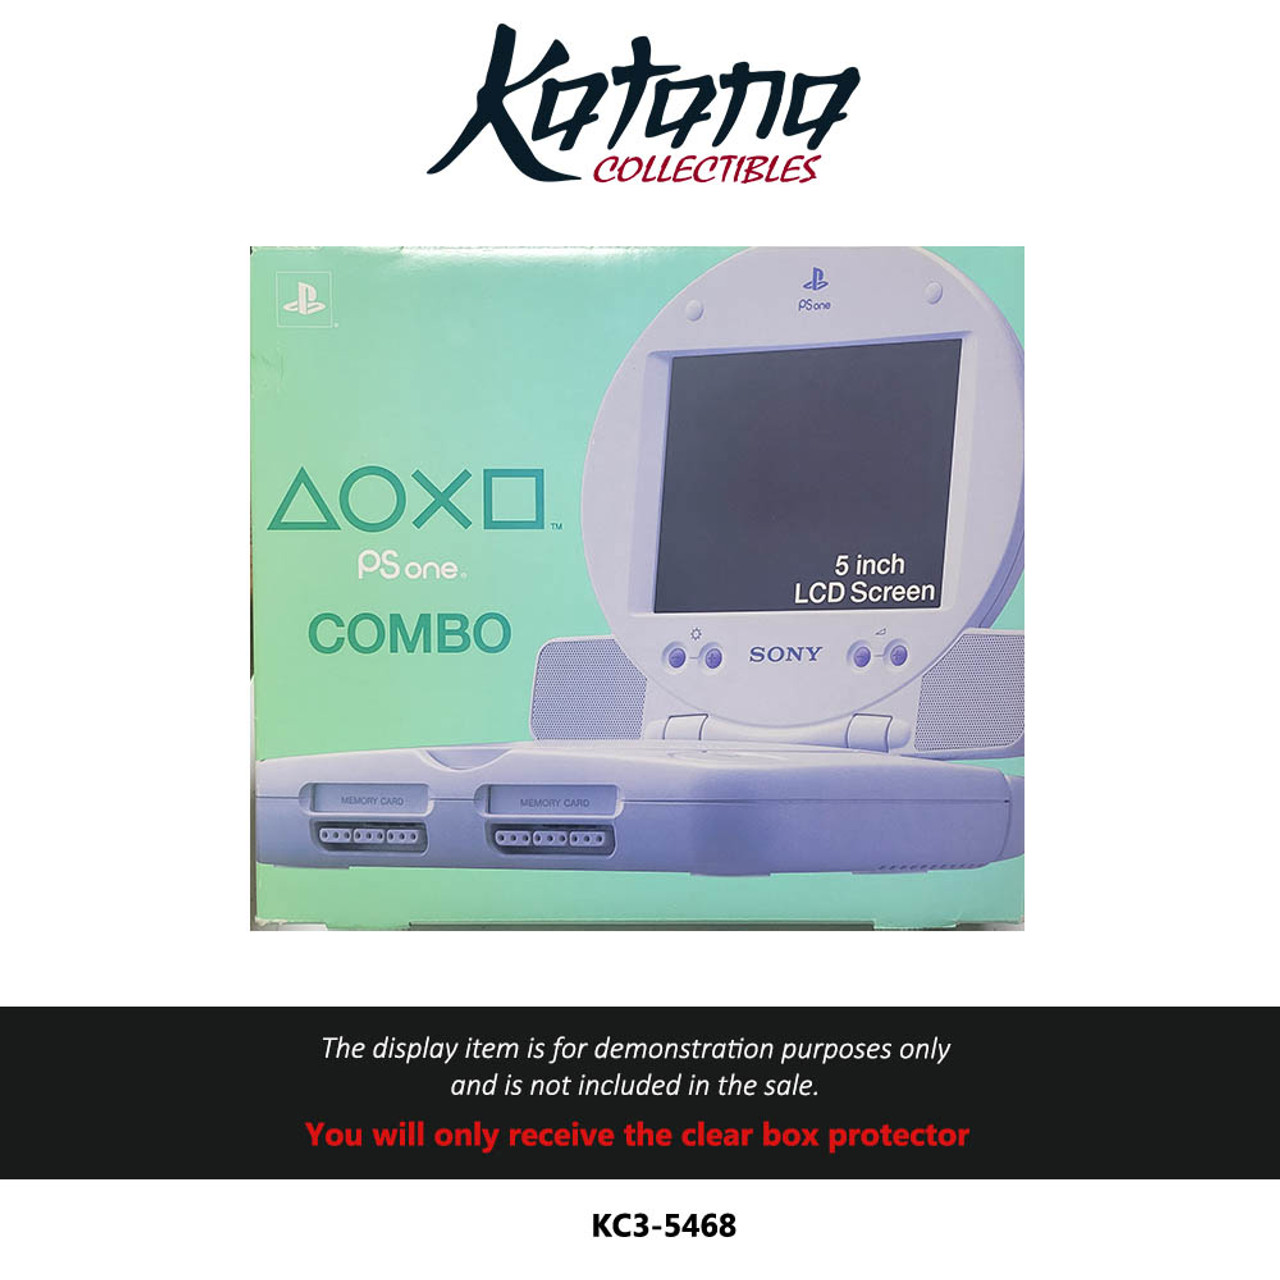 Katana Collectibles Protector For PS One Combo Console (EU Version)